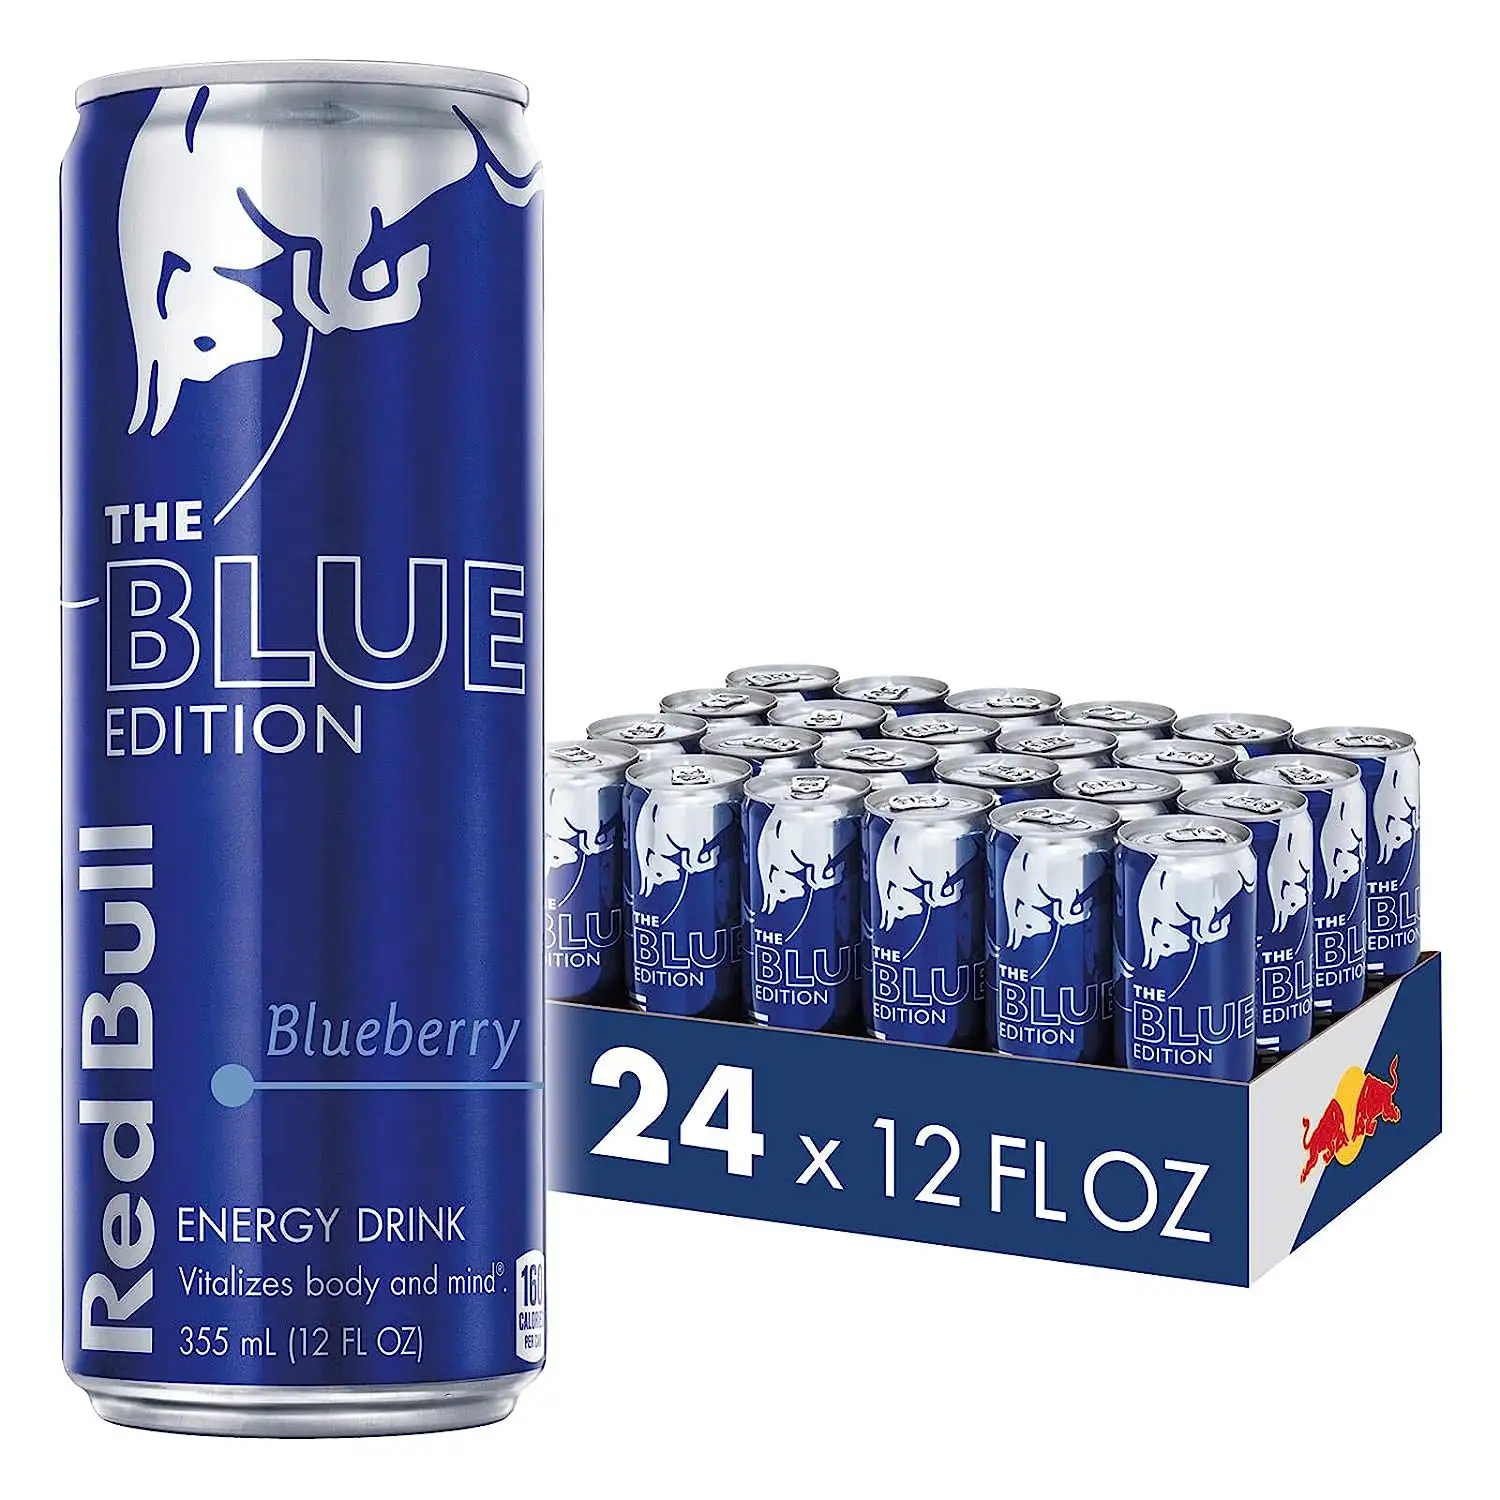 Red Bull Blue Edition Blueberry-Bebida energética Red Bull Blue Edition Blueberry